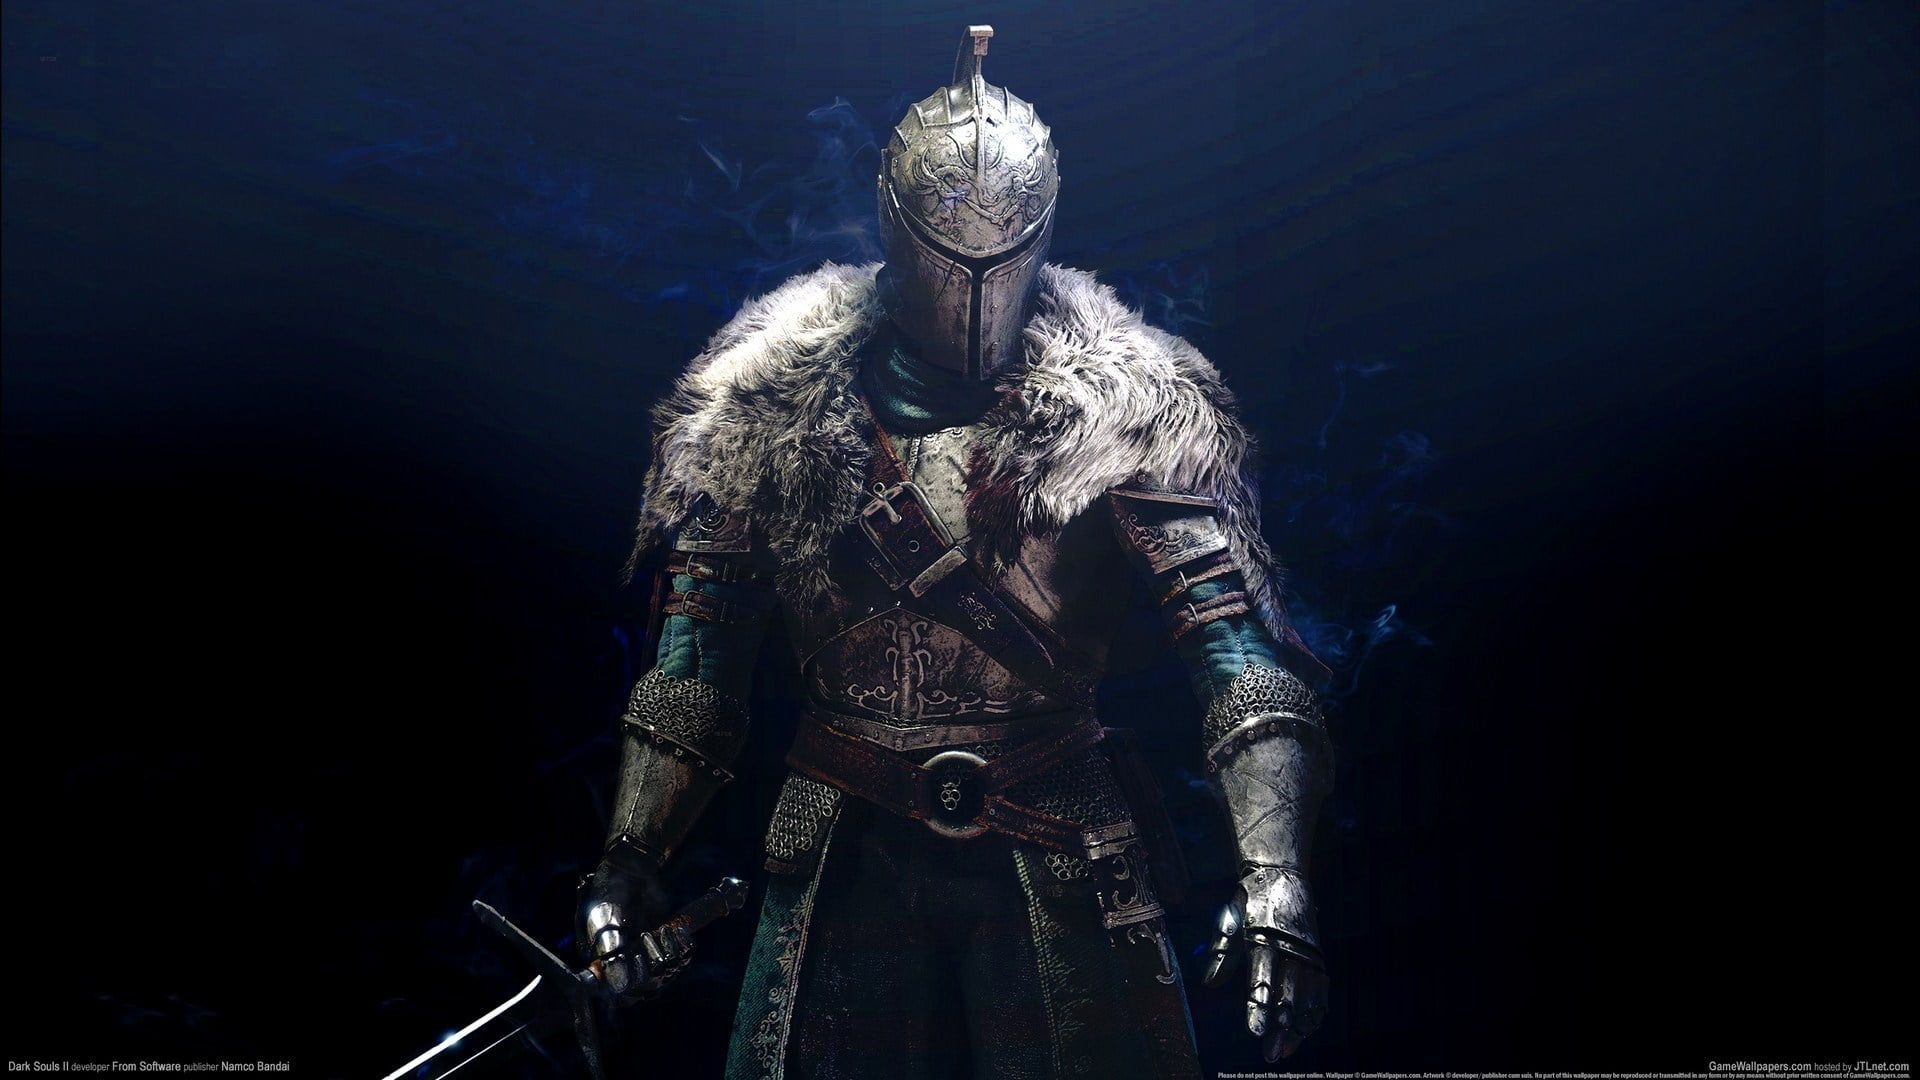 gray medieval armor and helm #game #armor #background #warrior #knight Dark Souls 2 P #wallpaper #hdwallpaper #desktop. Рыцарь, Игры, Картинки